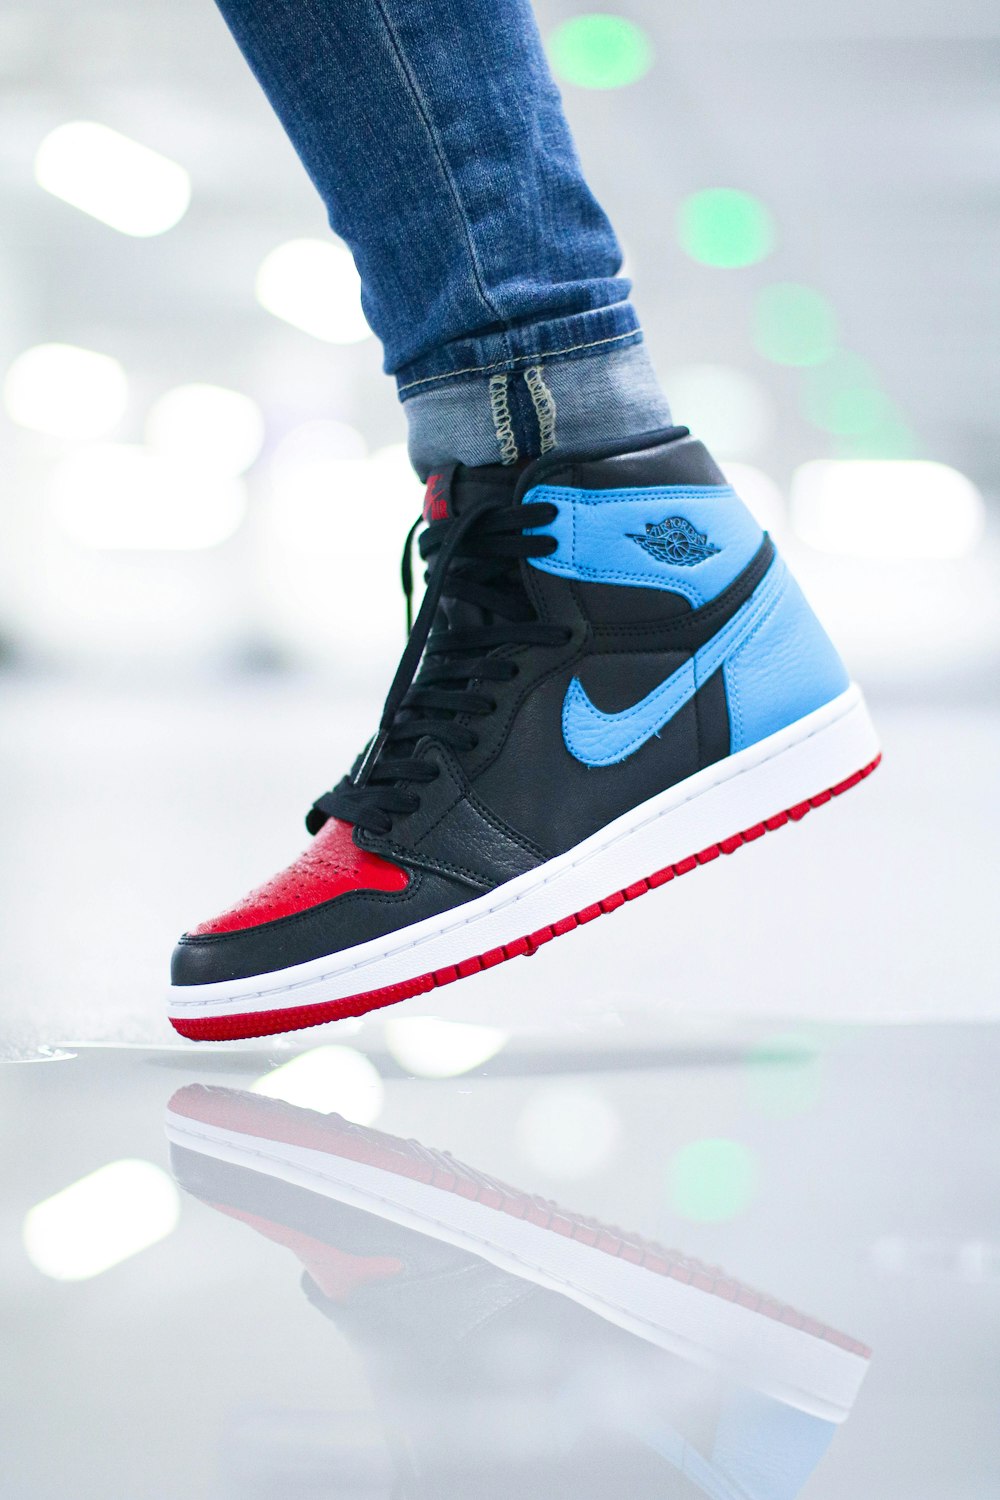 Person Wearing Black Blue And White Nike Air Jordan 1 Shoes Photo Free New York Image On Unsplash